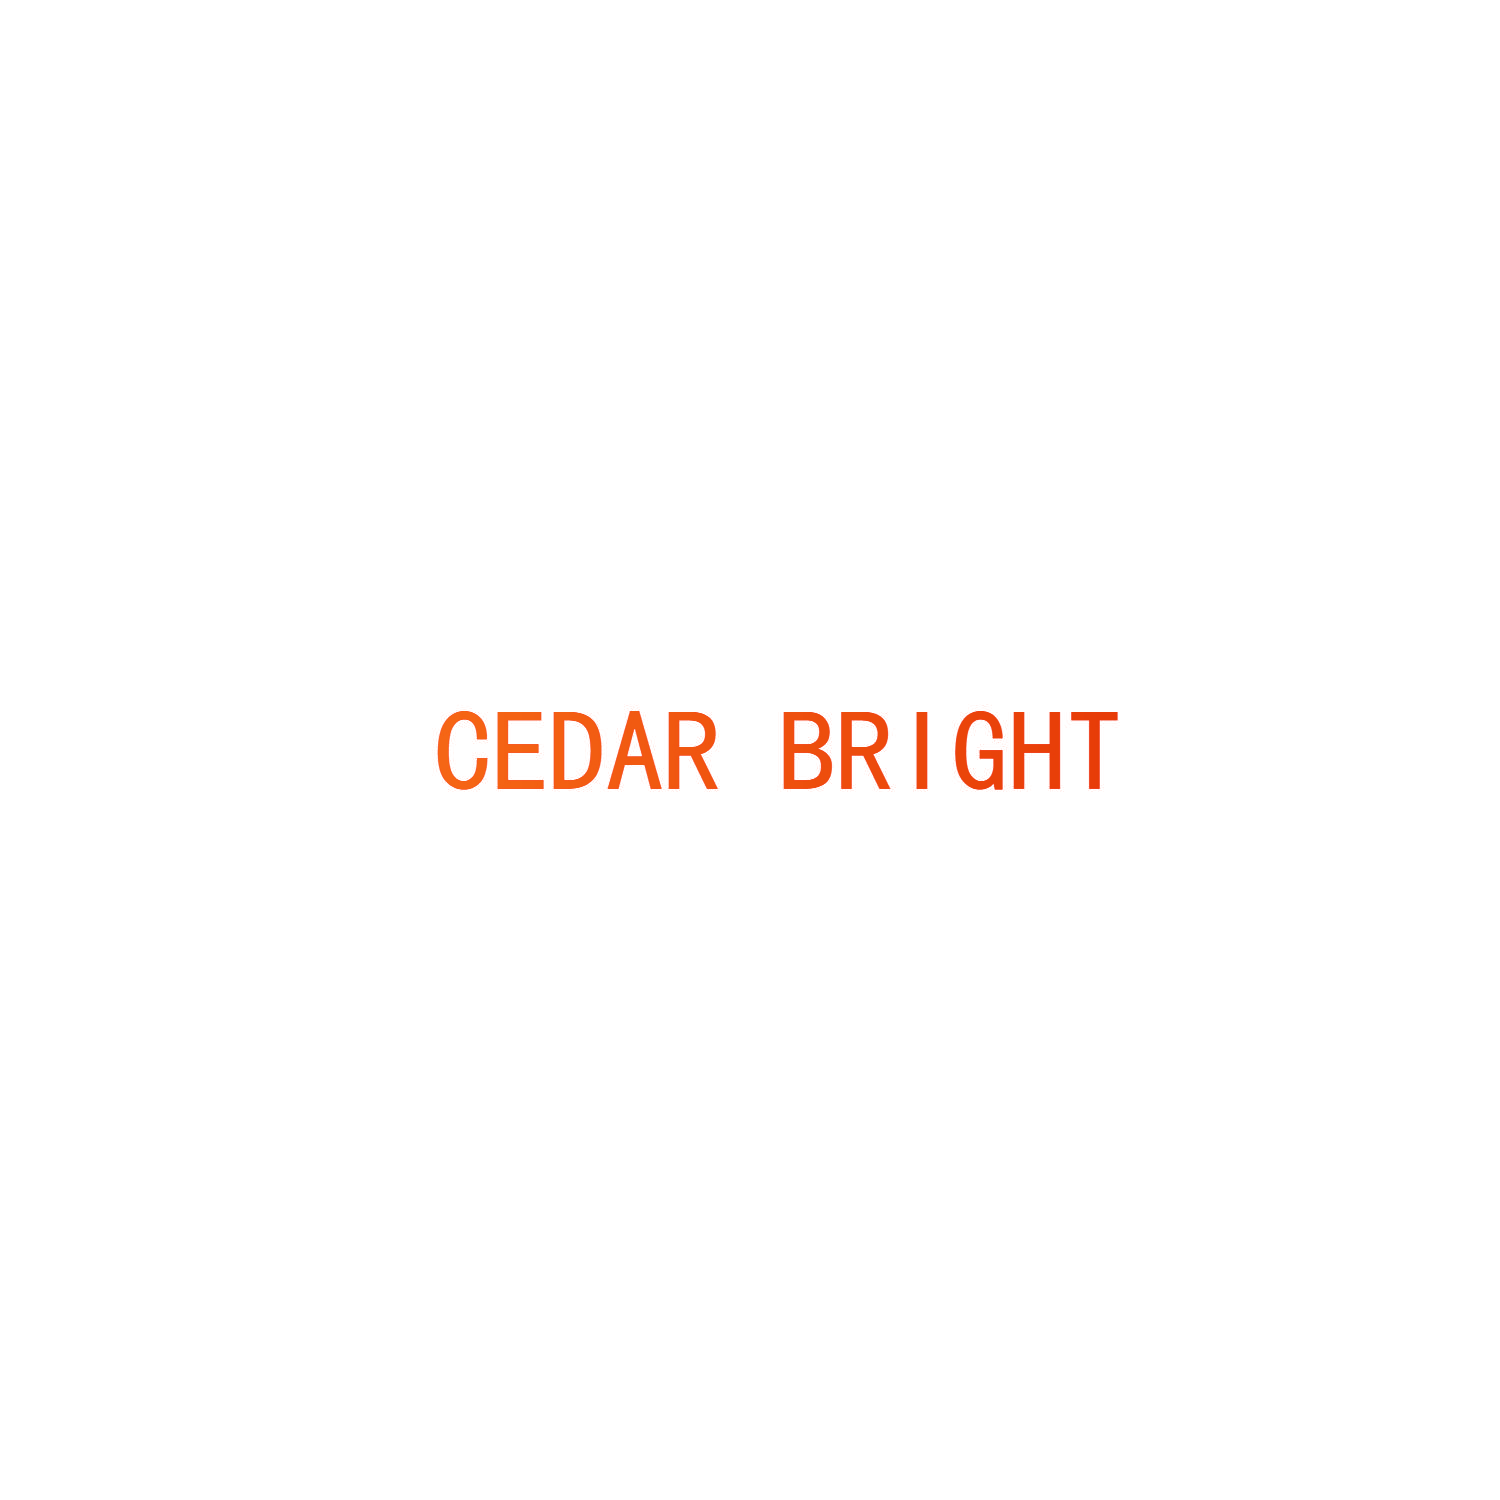 CEDAR BRIGHT